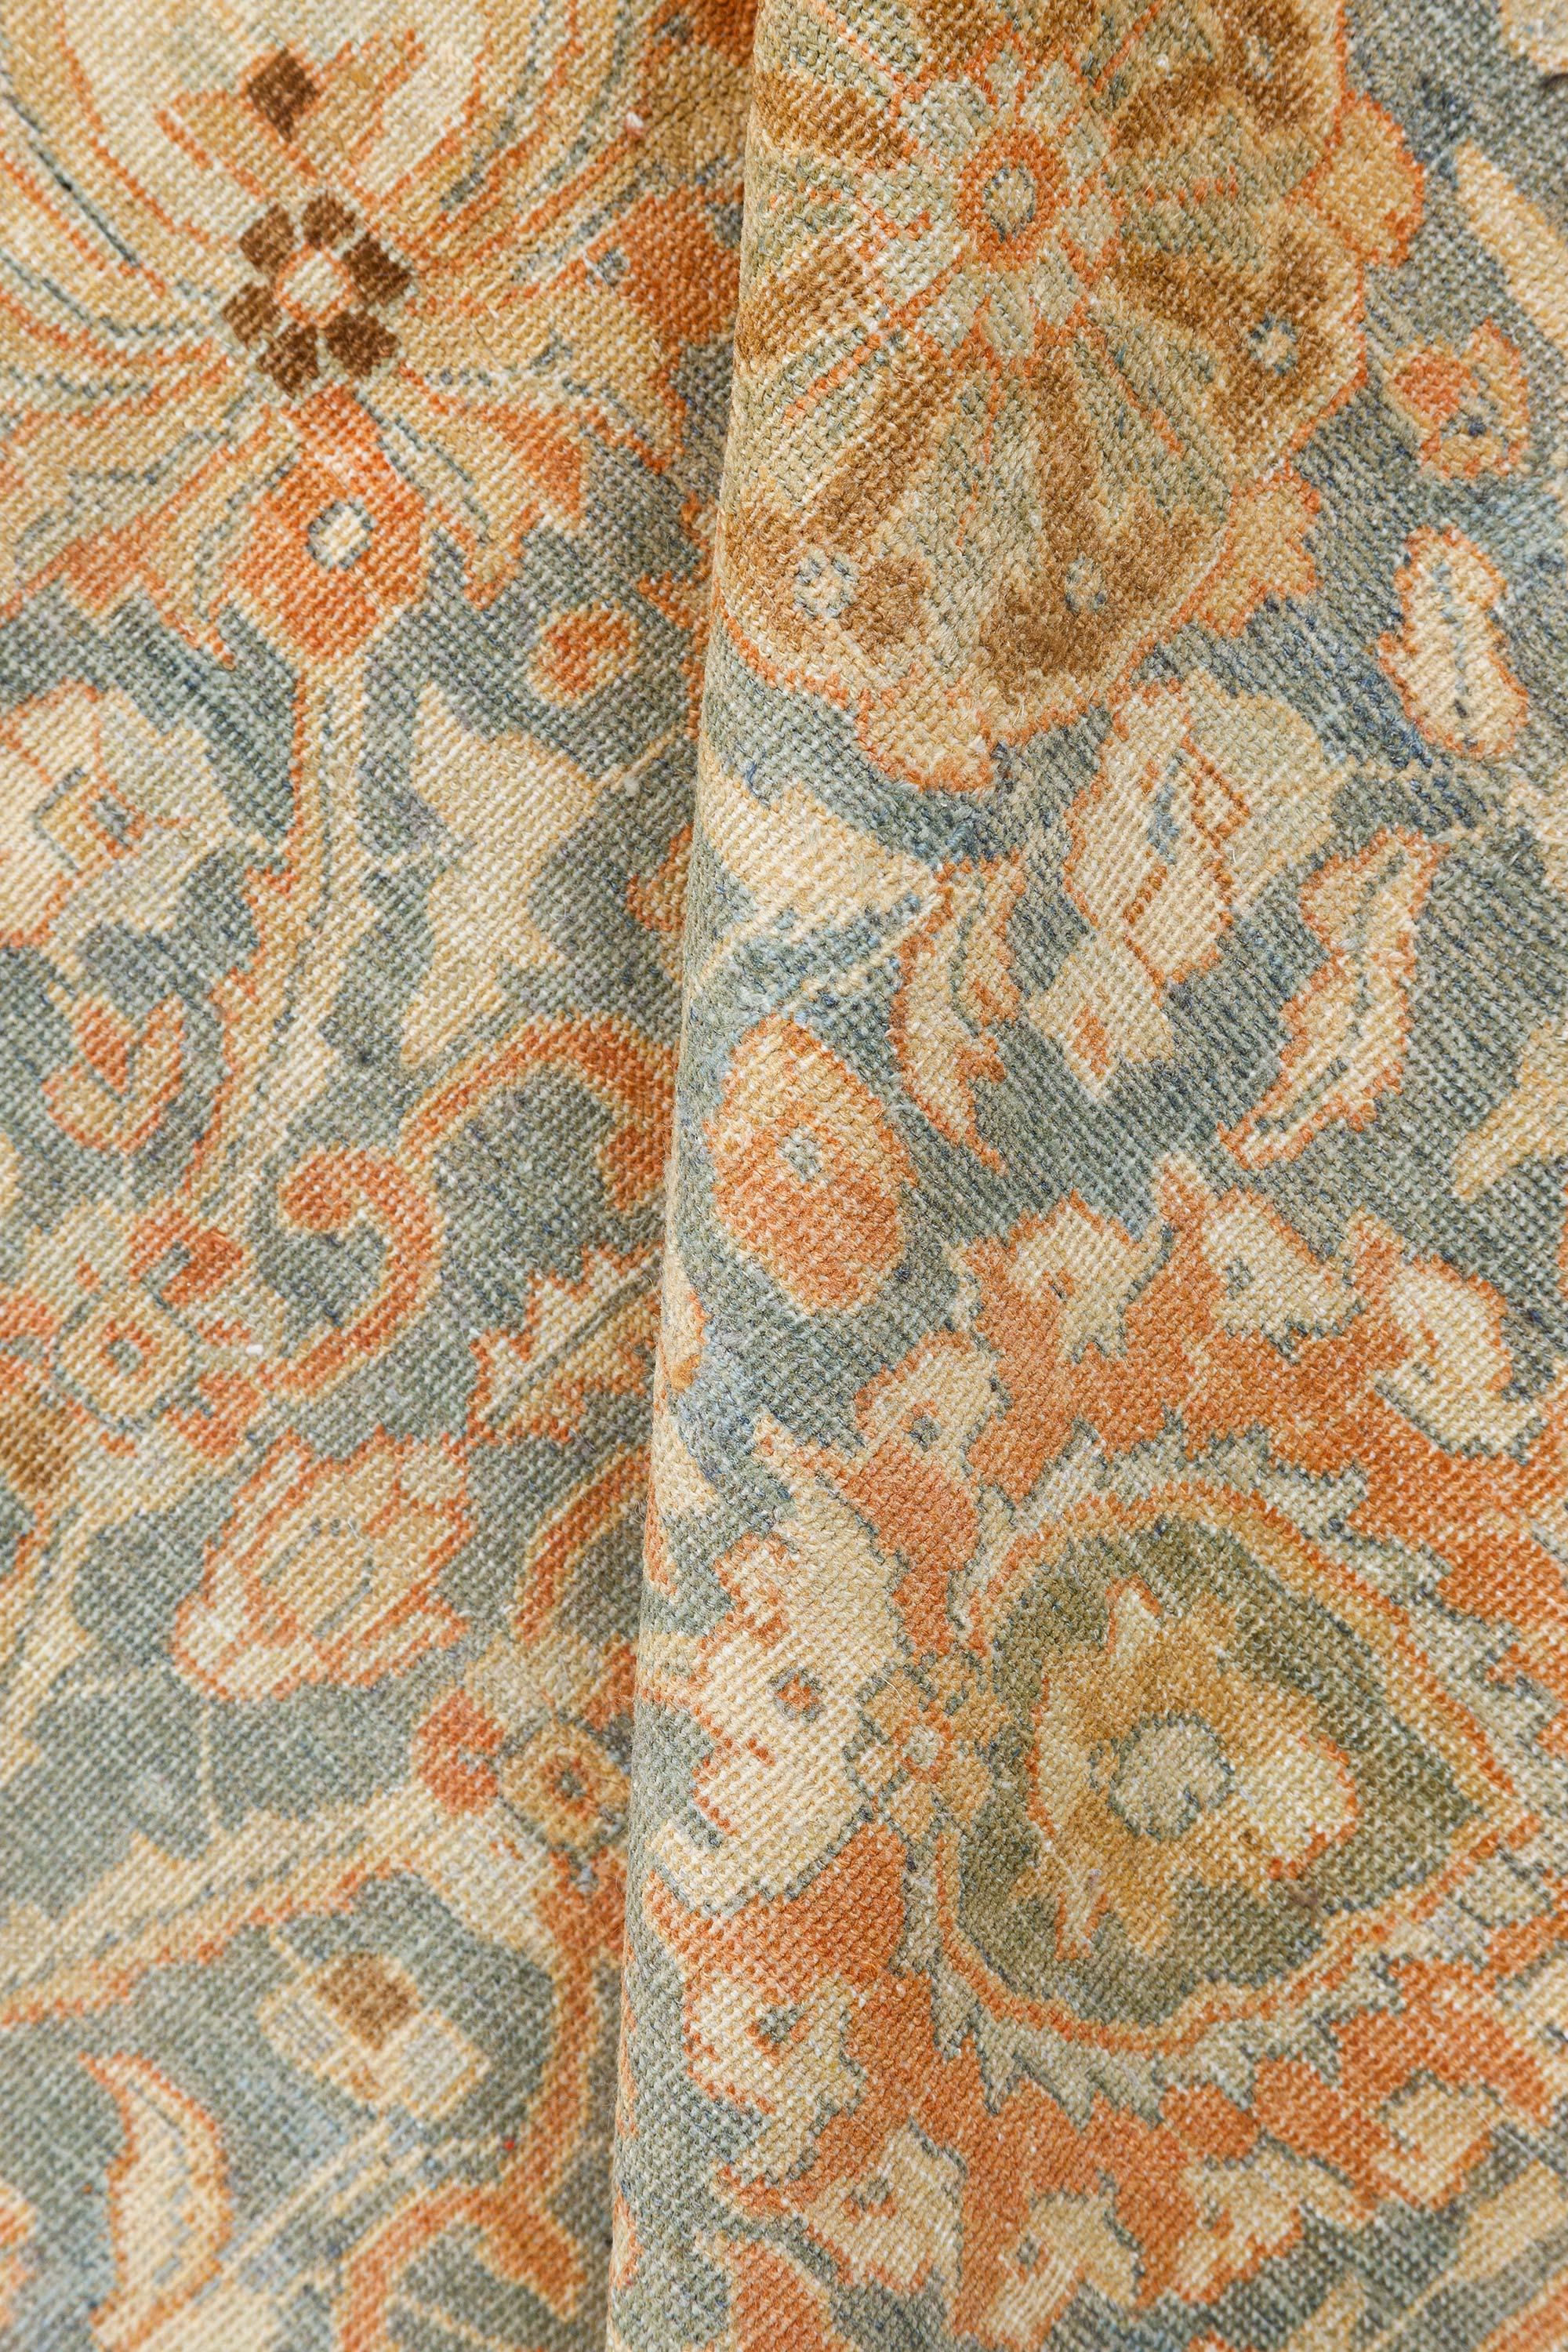 Authentic 19th Century Persian Tabriz Botanic Handmade Carpet
Size: 11'3